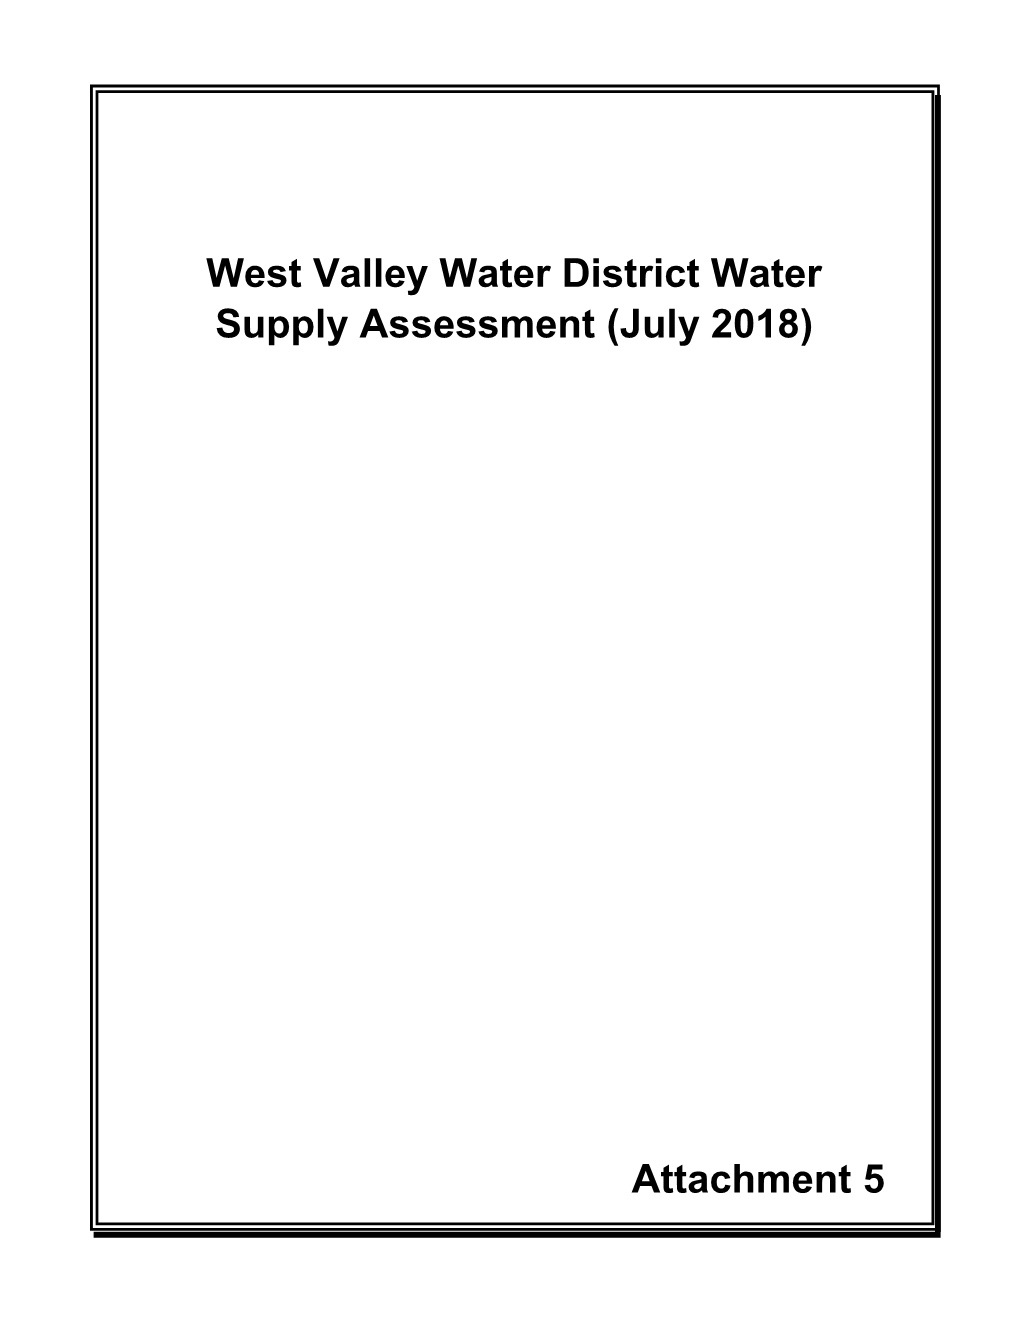 Final Water Supply Assessment for I-15 Logistics Center 8 7/13/2018